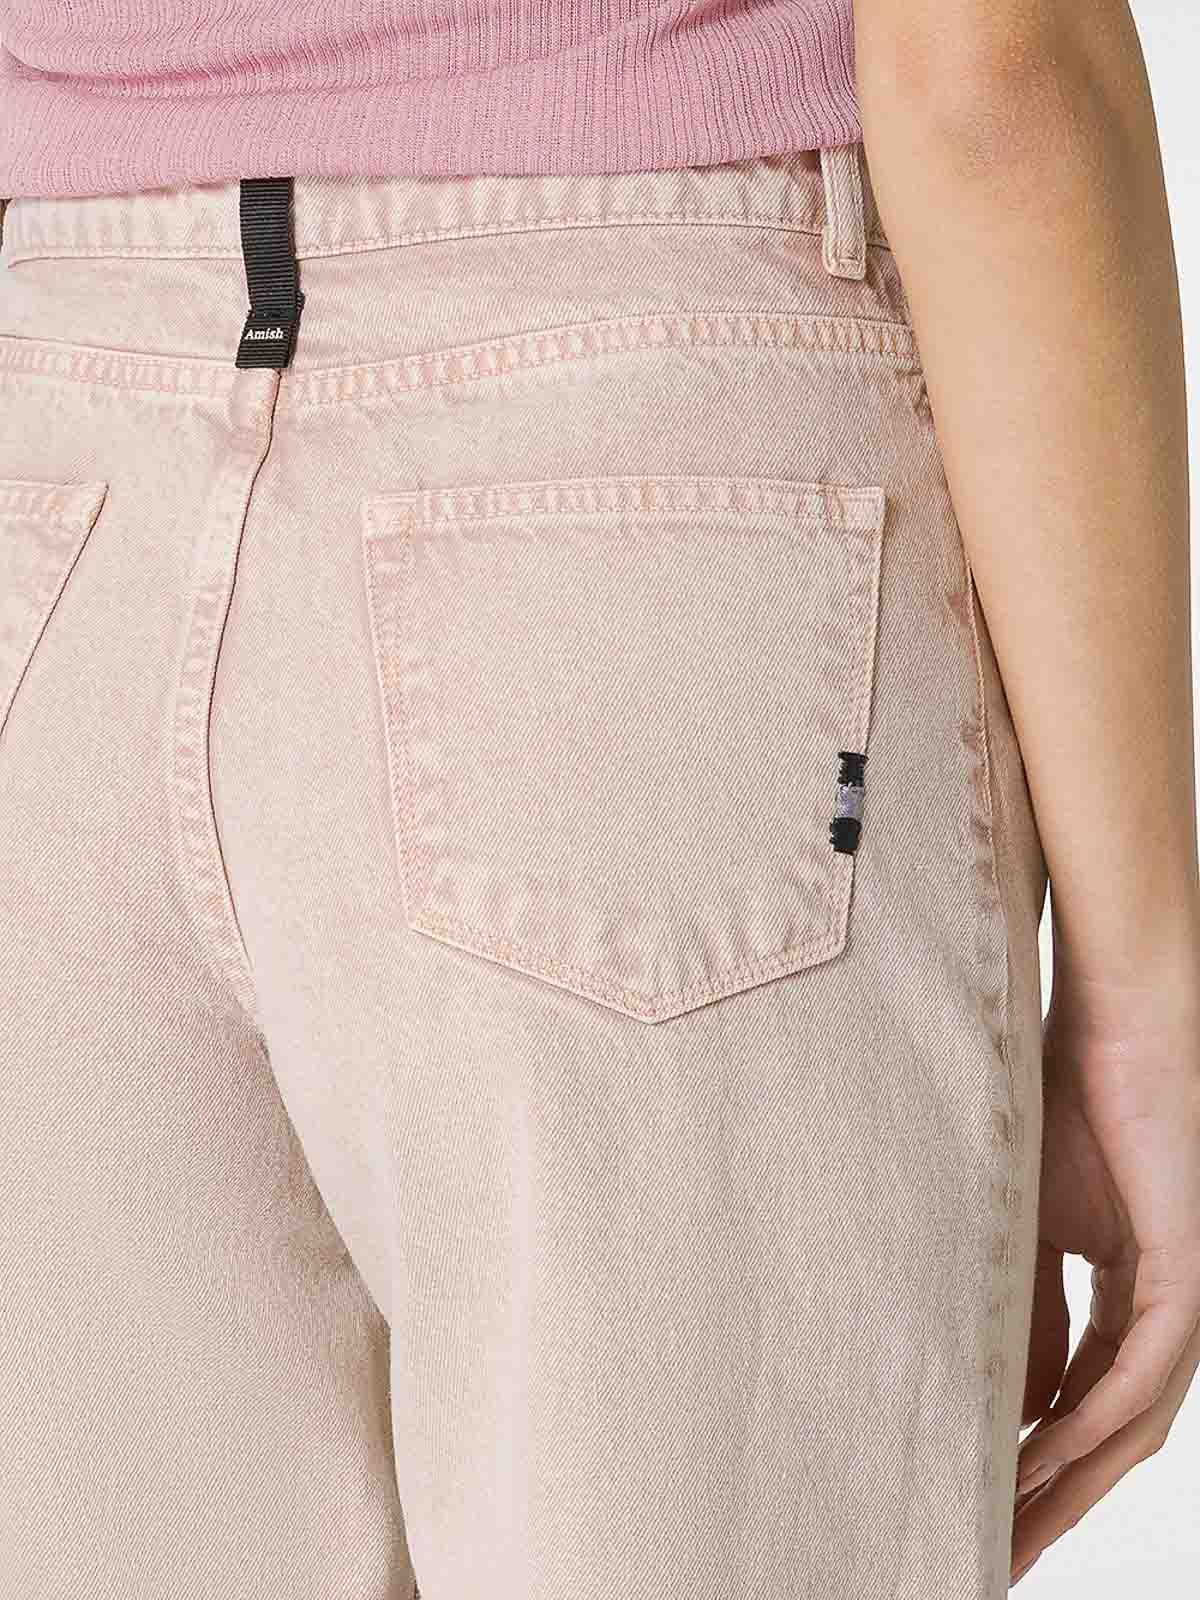 Shop Amish Linda Jeans In Color Carne Y Neutral